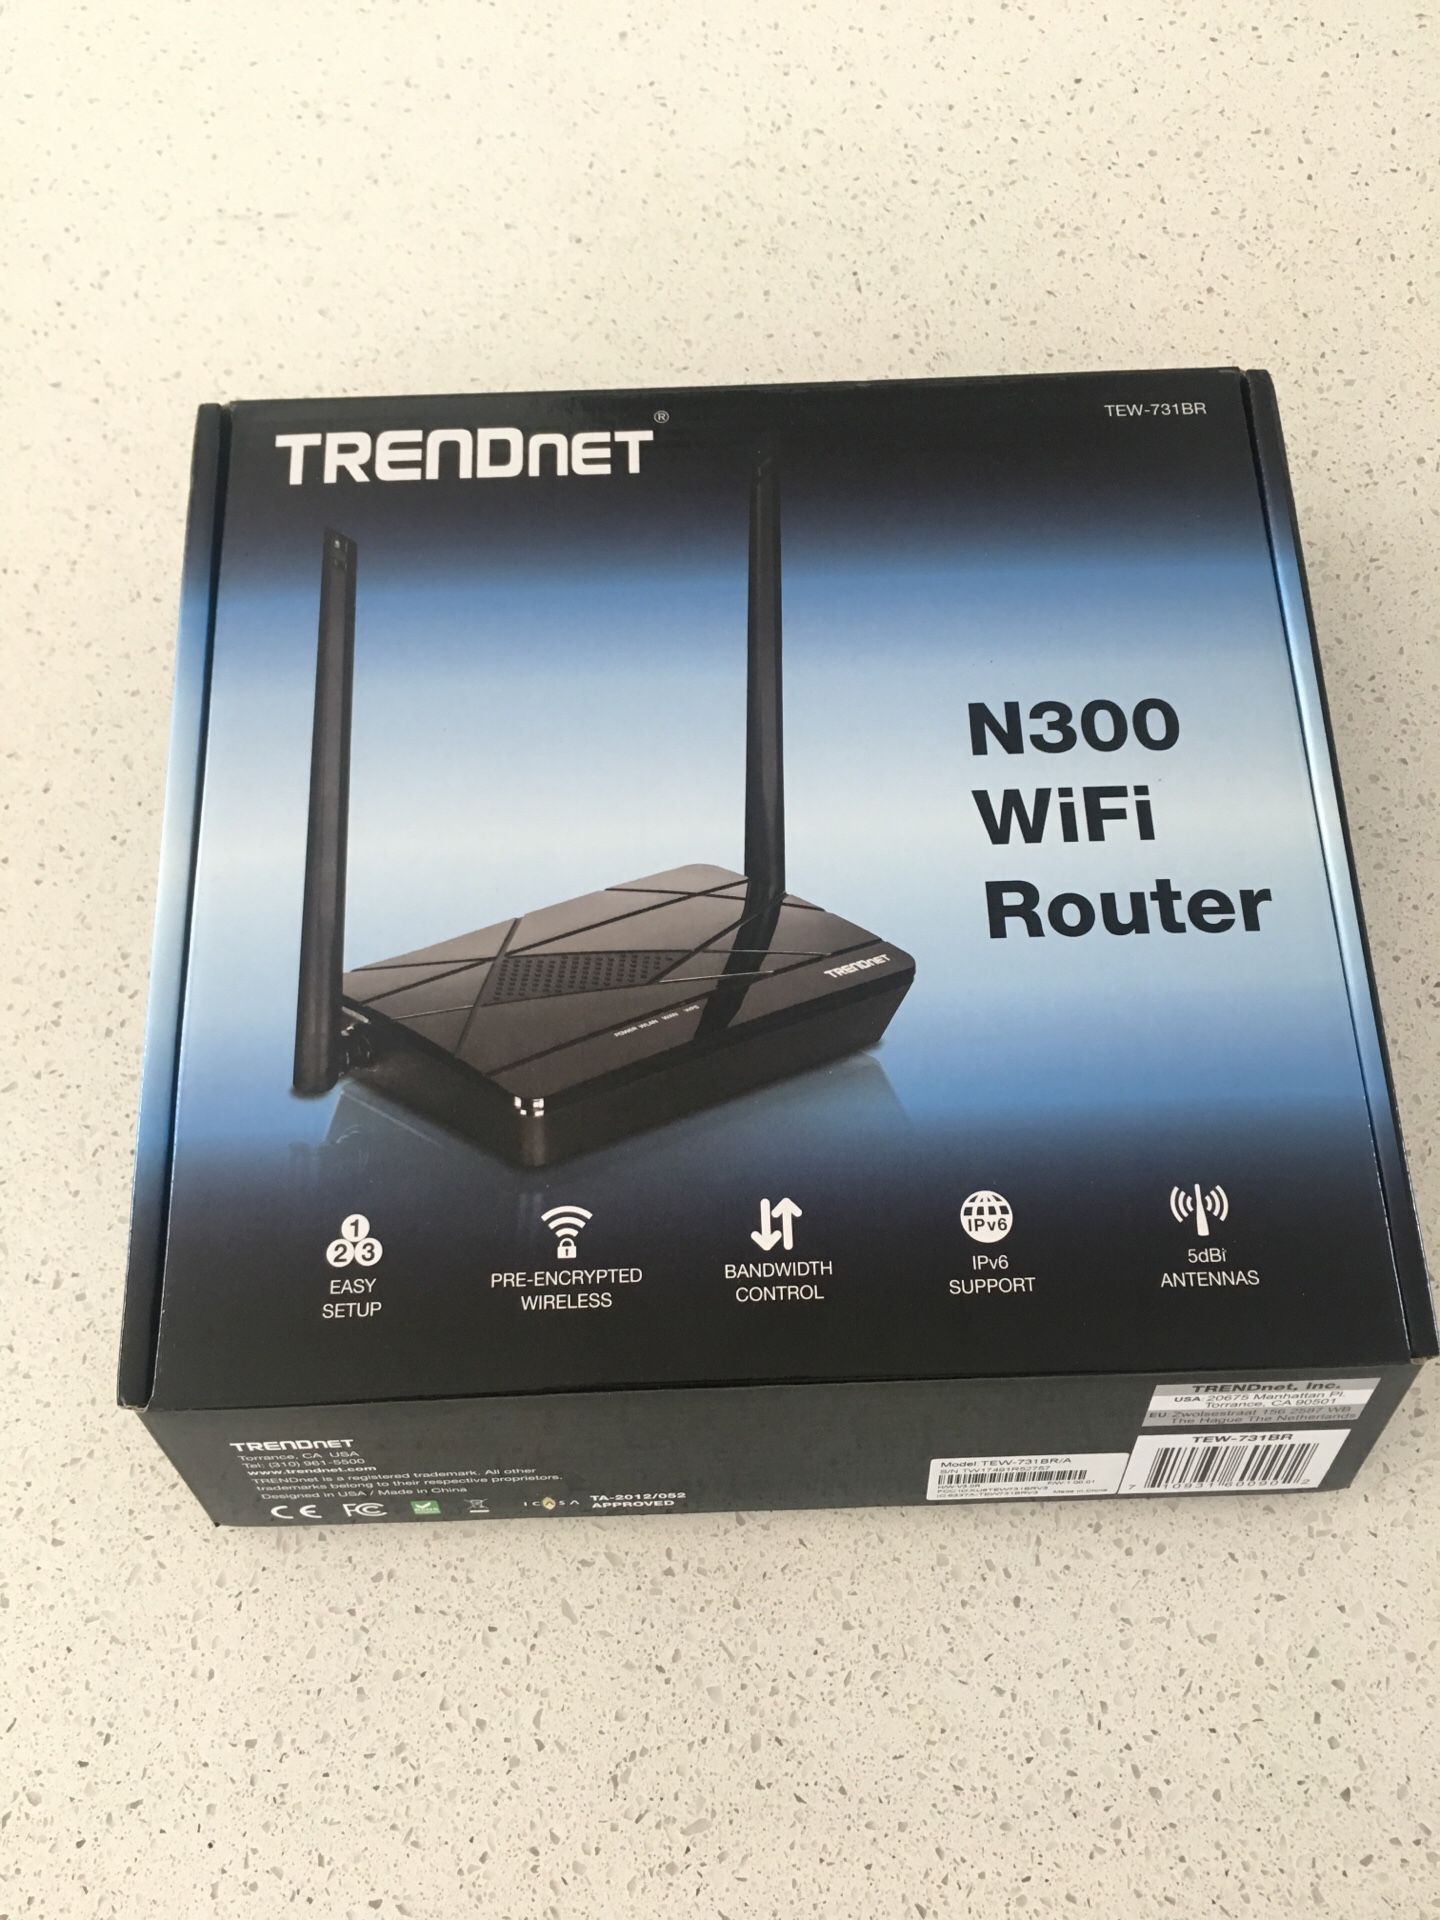 TRENDnet N300 WiFi Router